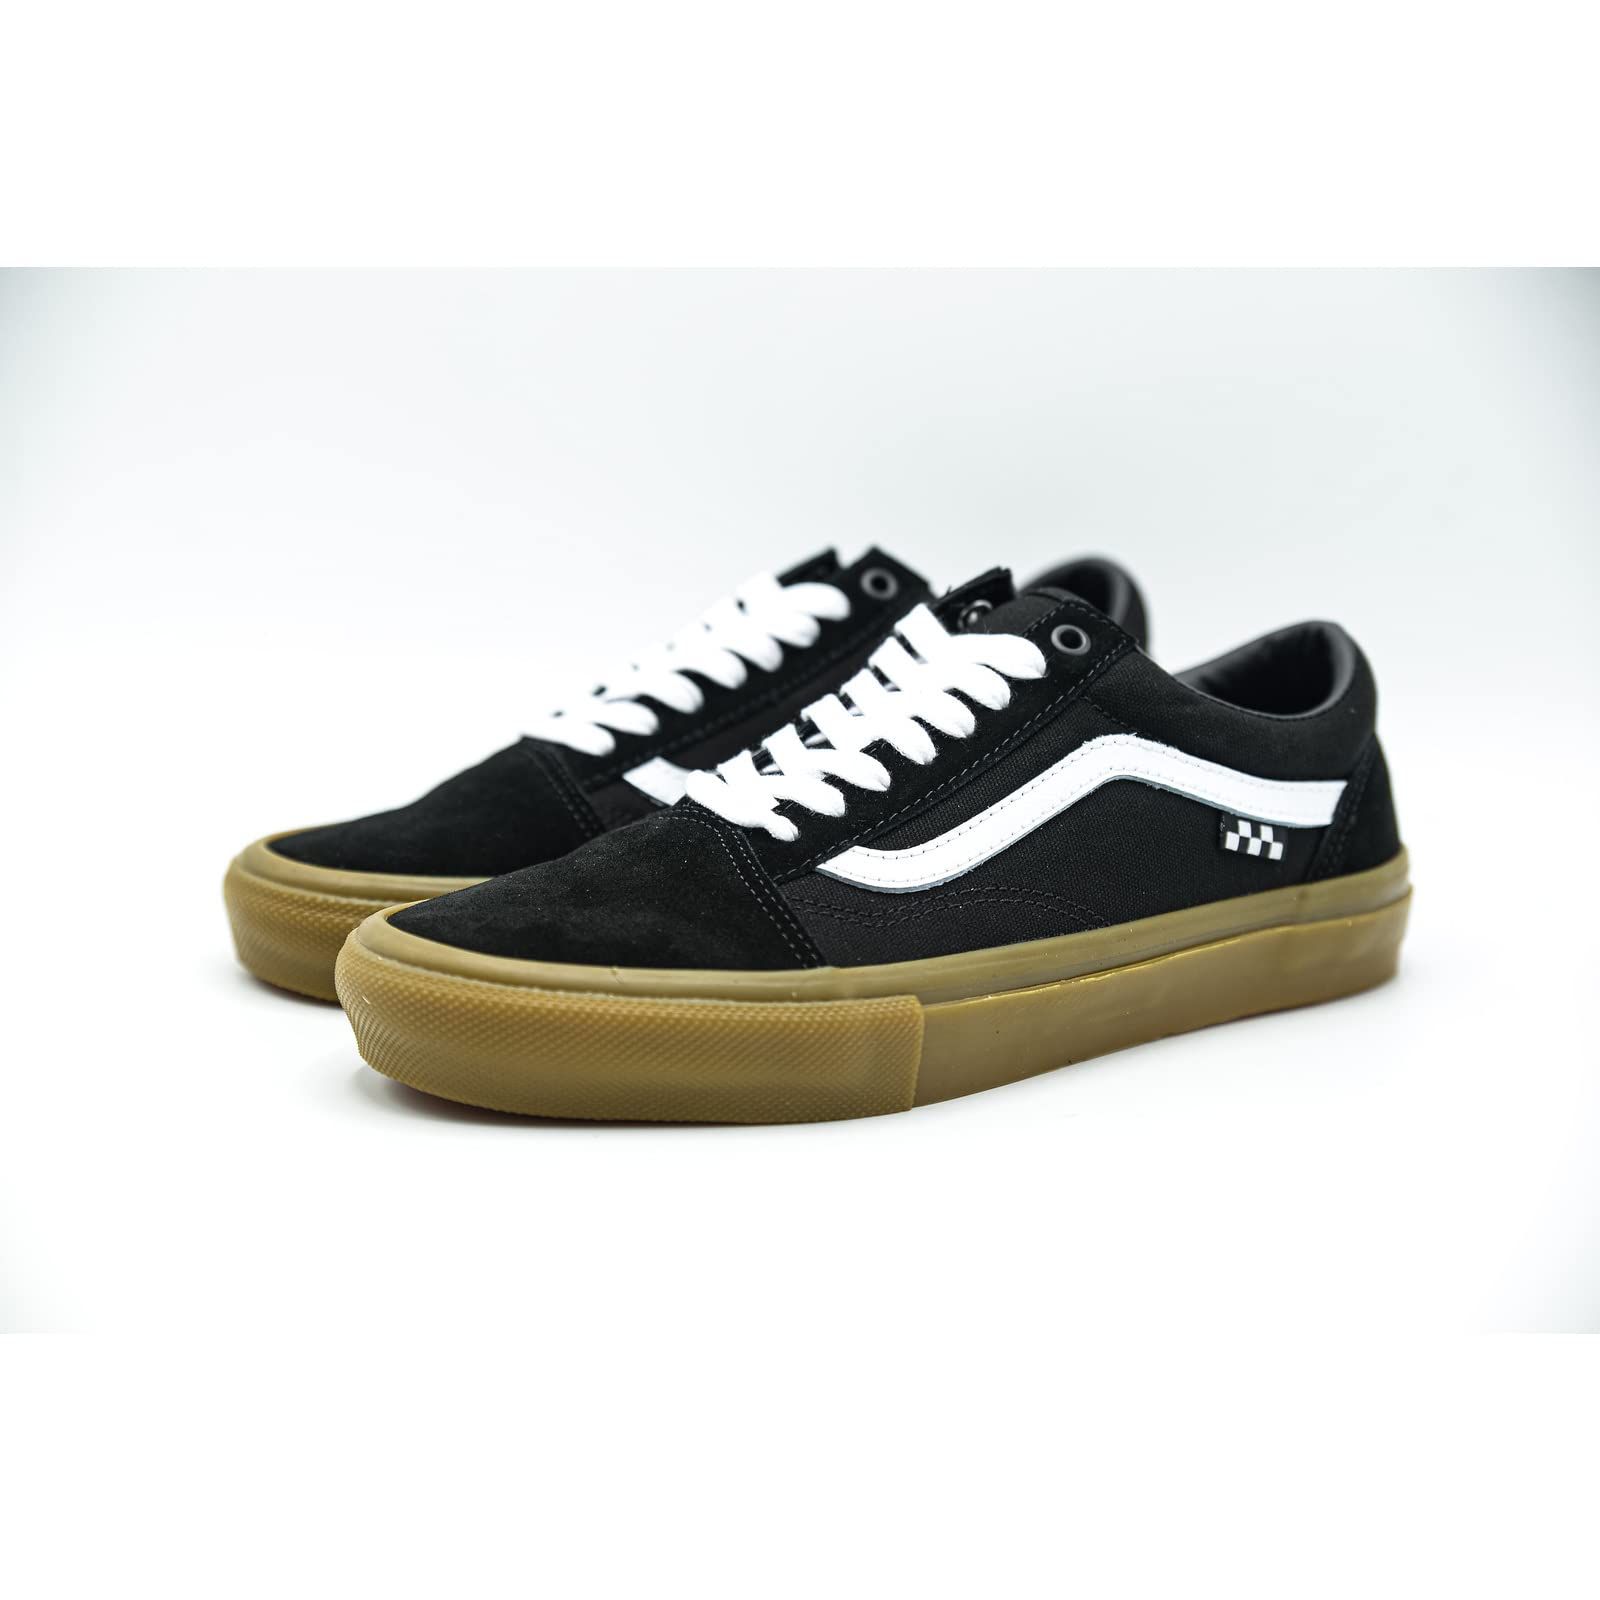 Vans Men's Skate Old Skool Sneaker, Black/Gum, Size 11.5